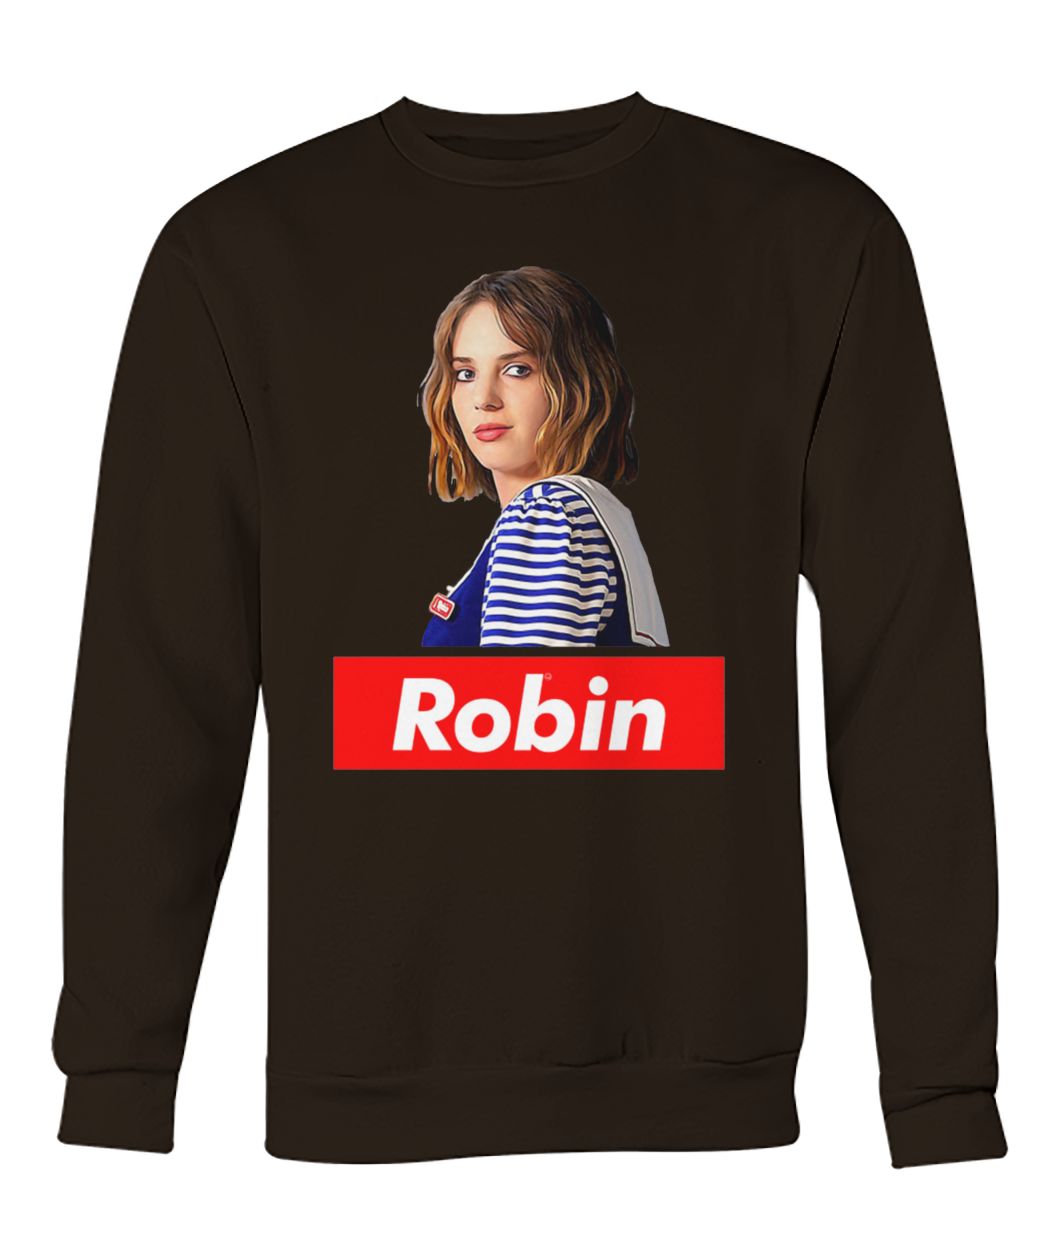 Stranger things season 3 robin crew neck sweatshirt